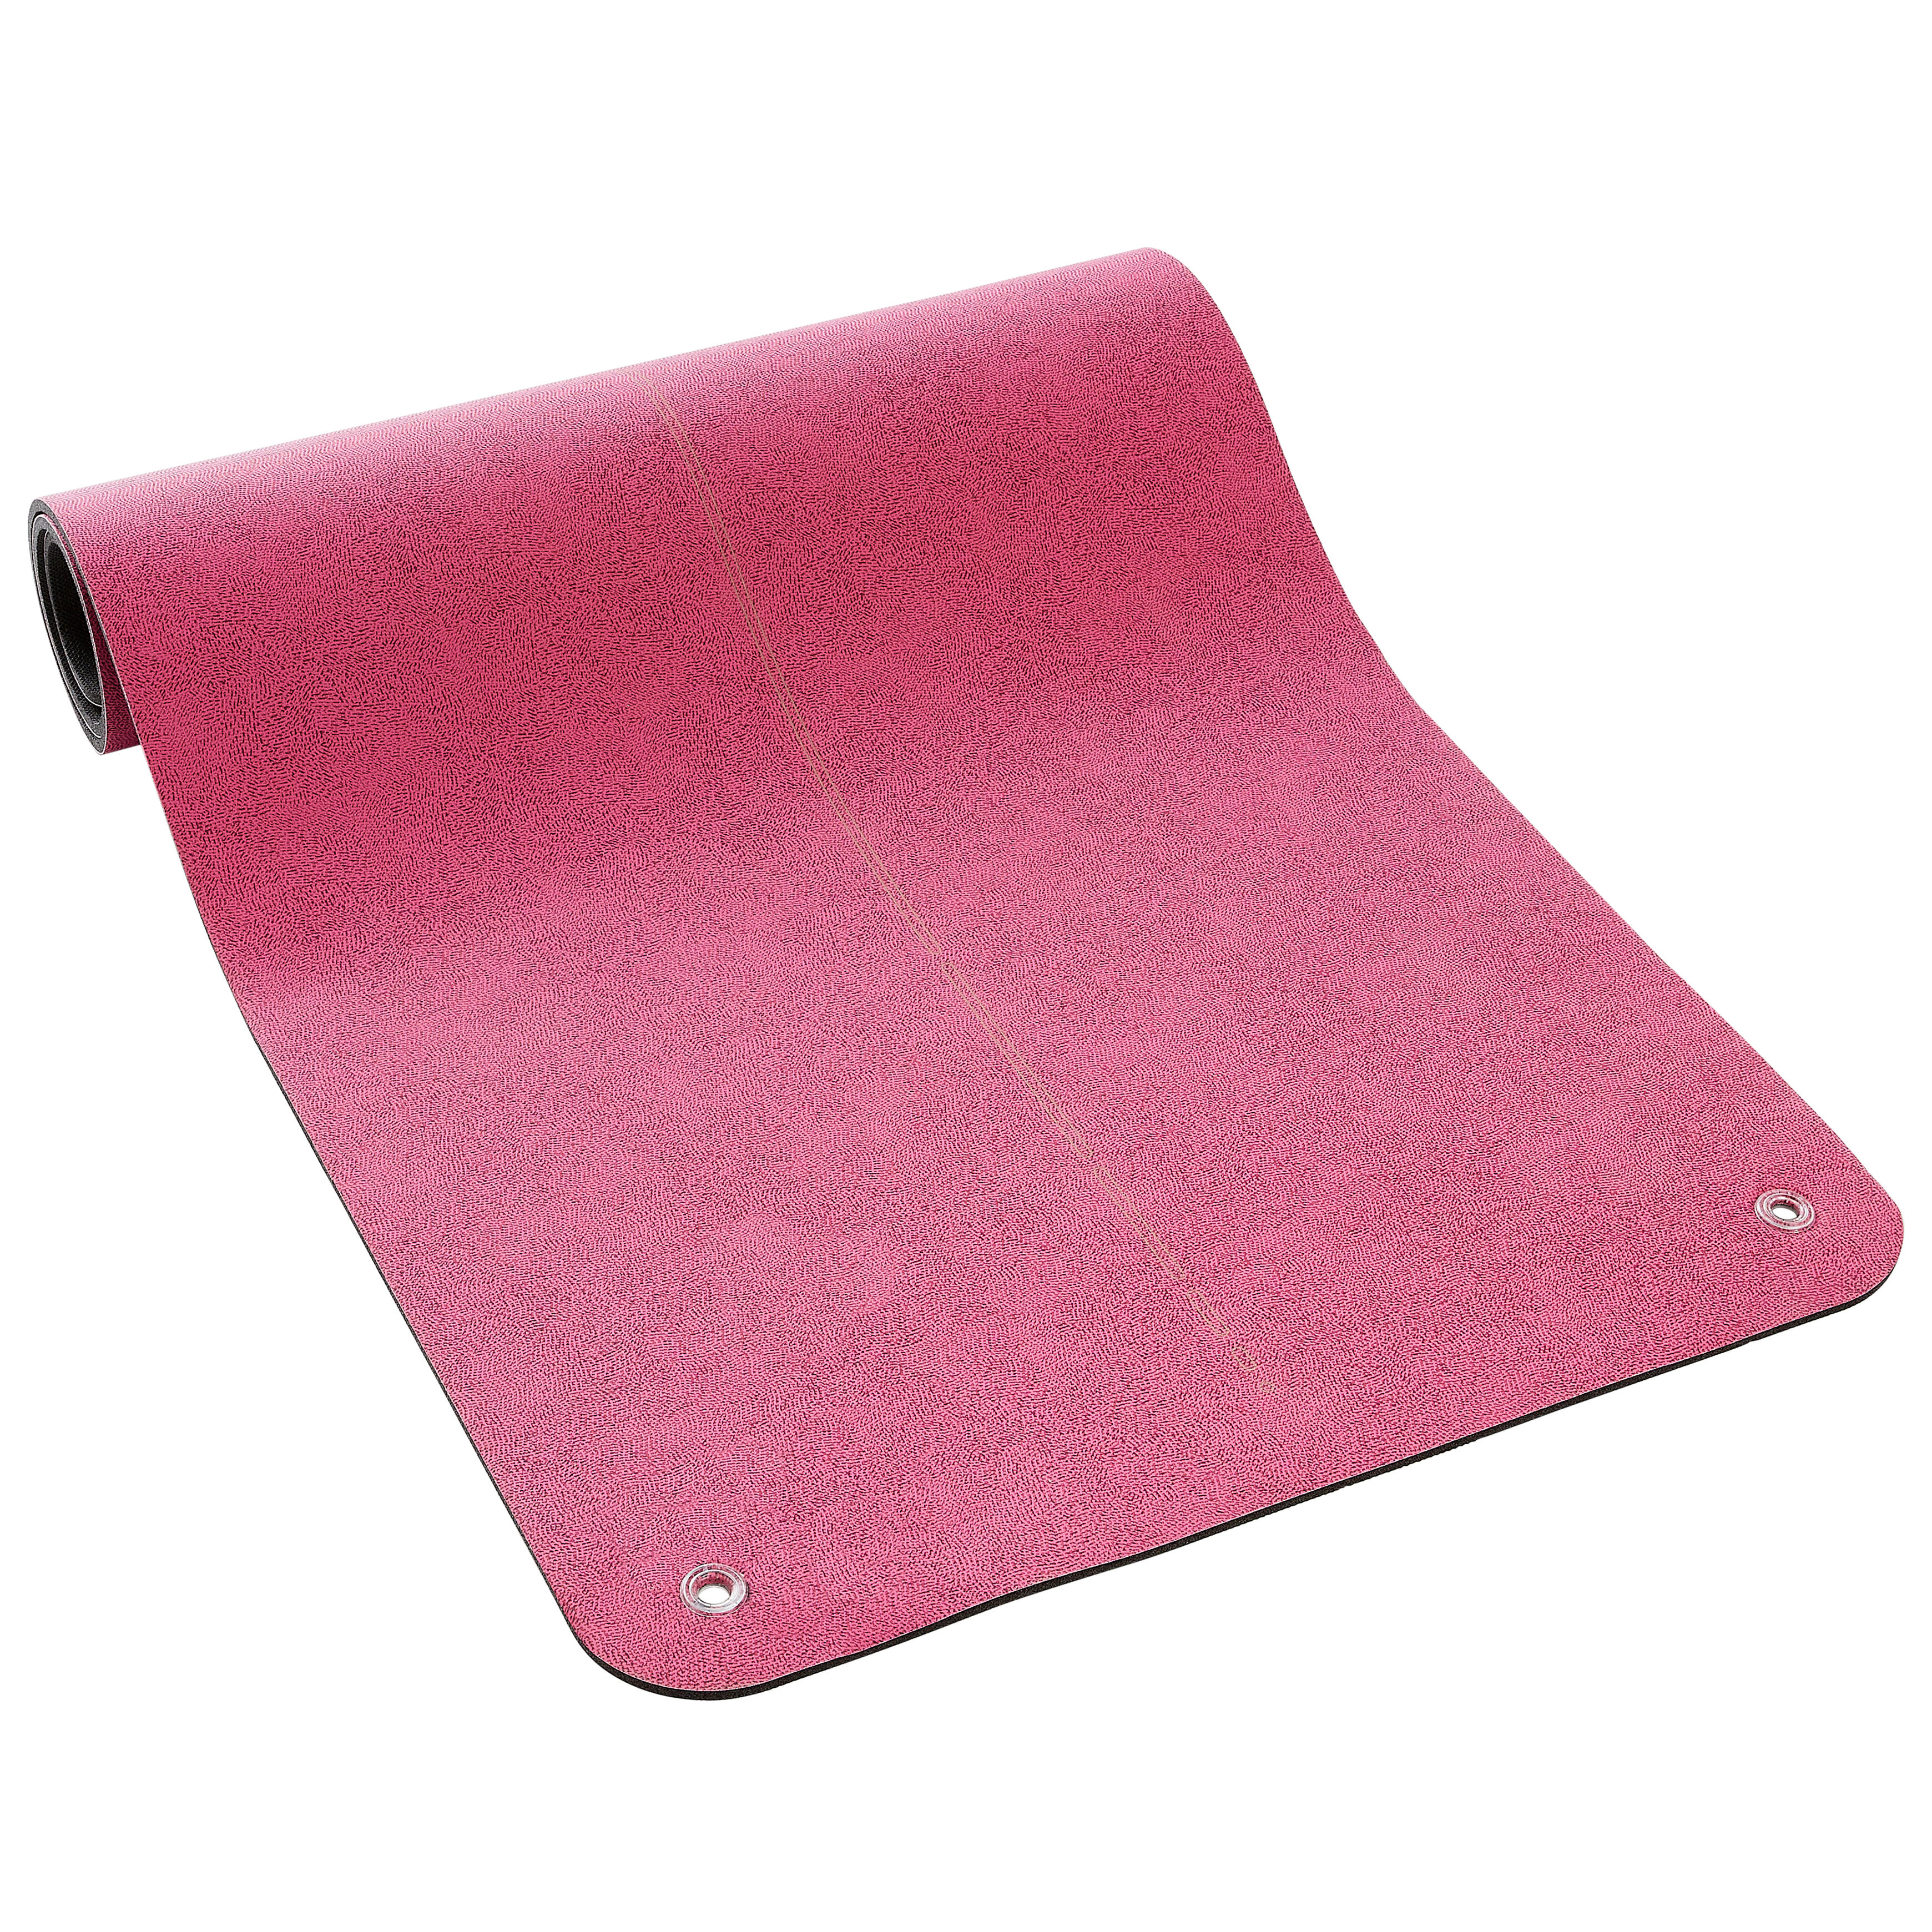 Fitness Tone Floor Mat Size S - 500 Pink - DOMYOS